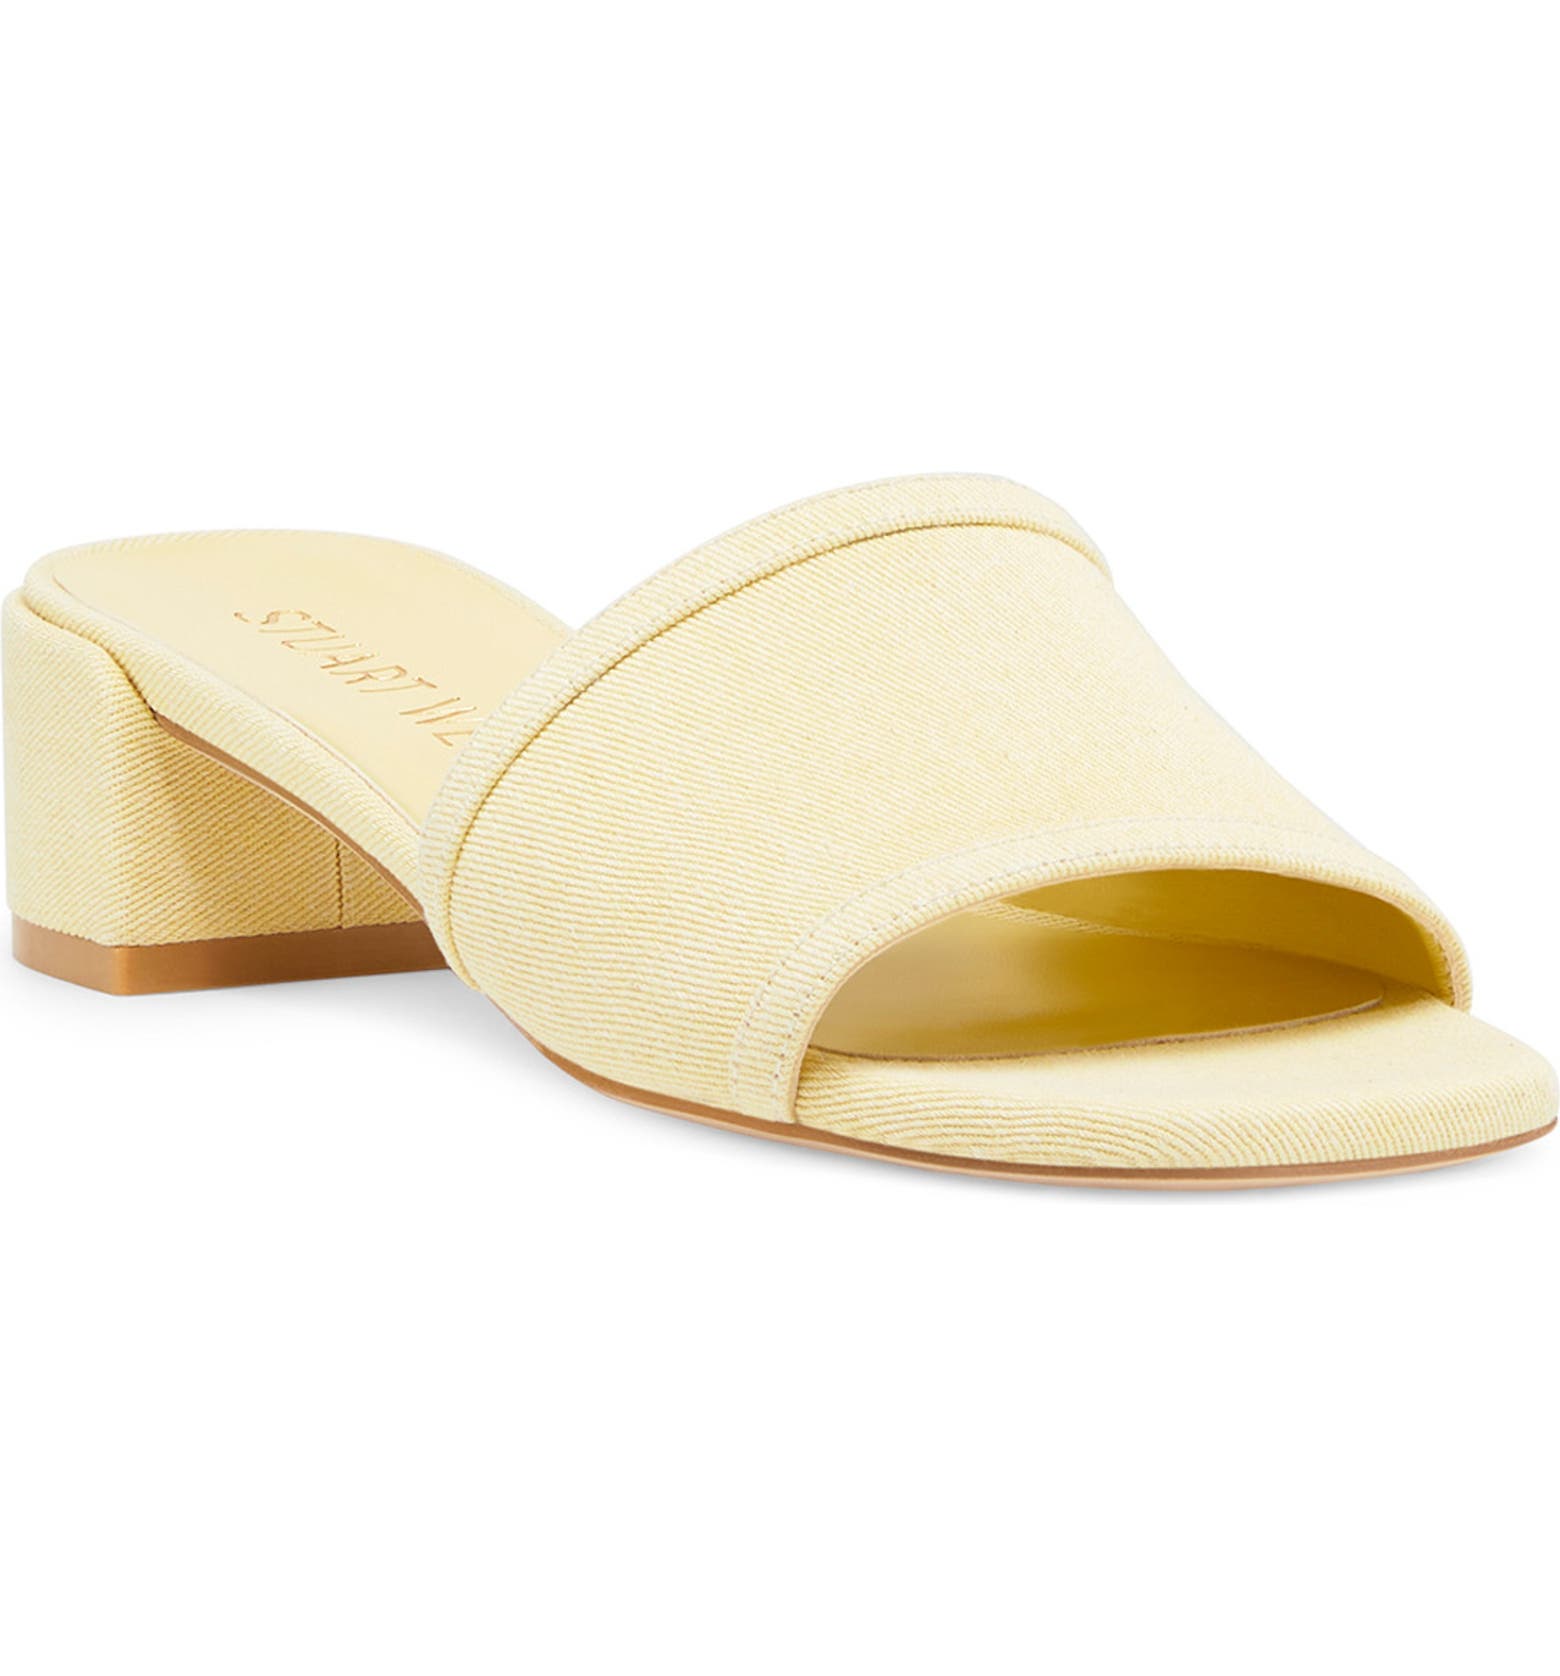 Pastel yellow slide sandals